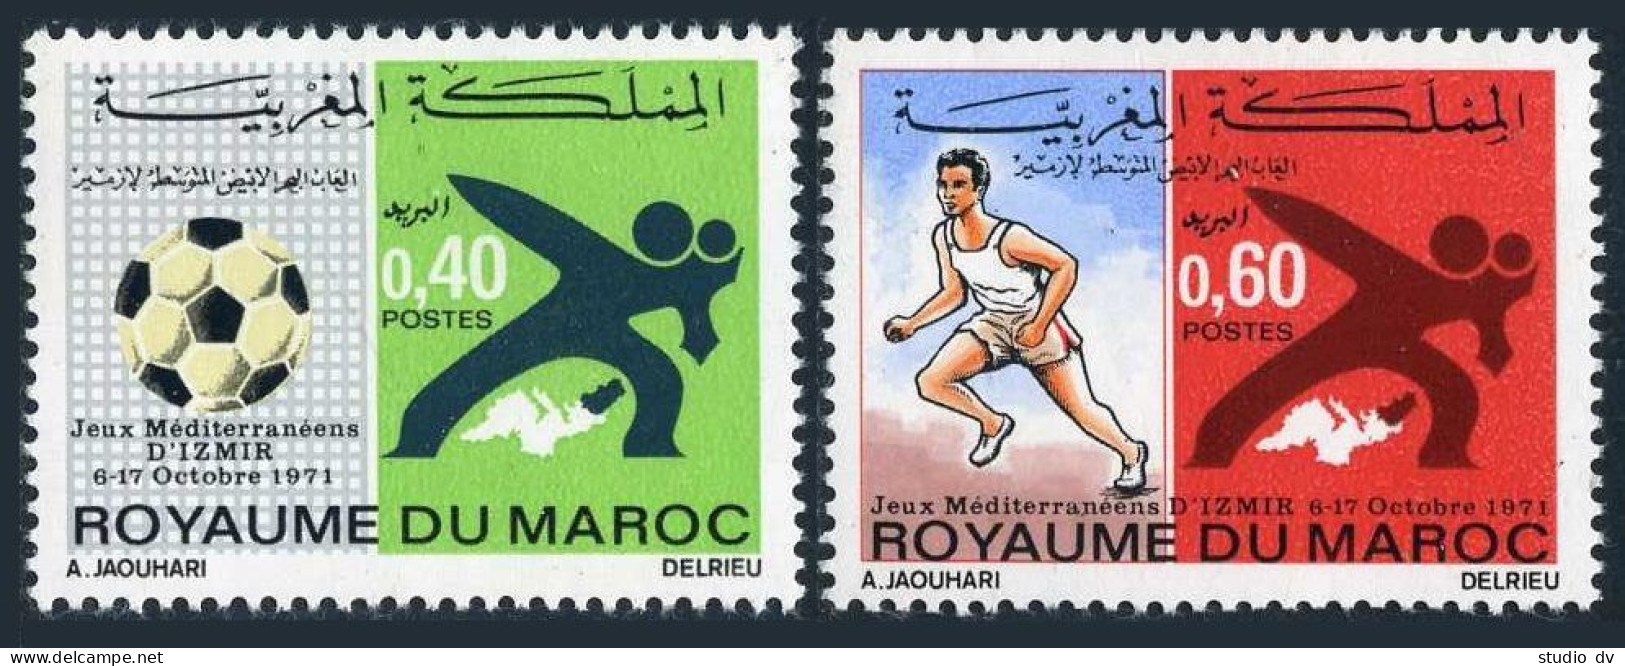 Morocco 248-249,MNH.Michel 691-692. Mediterranean Games, 1971. Soccer, Runner. - Maroc (1956-...)